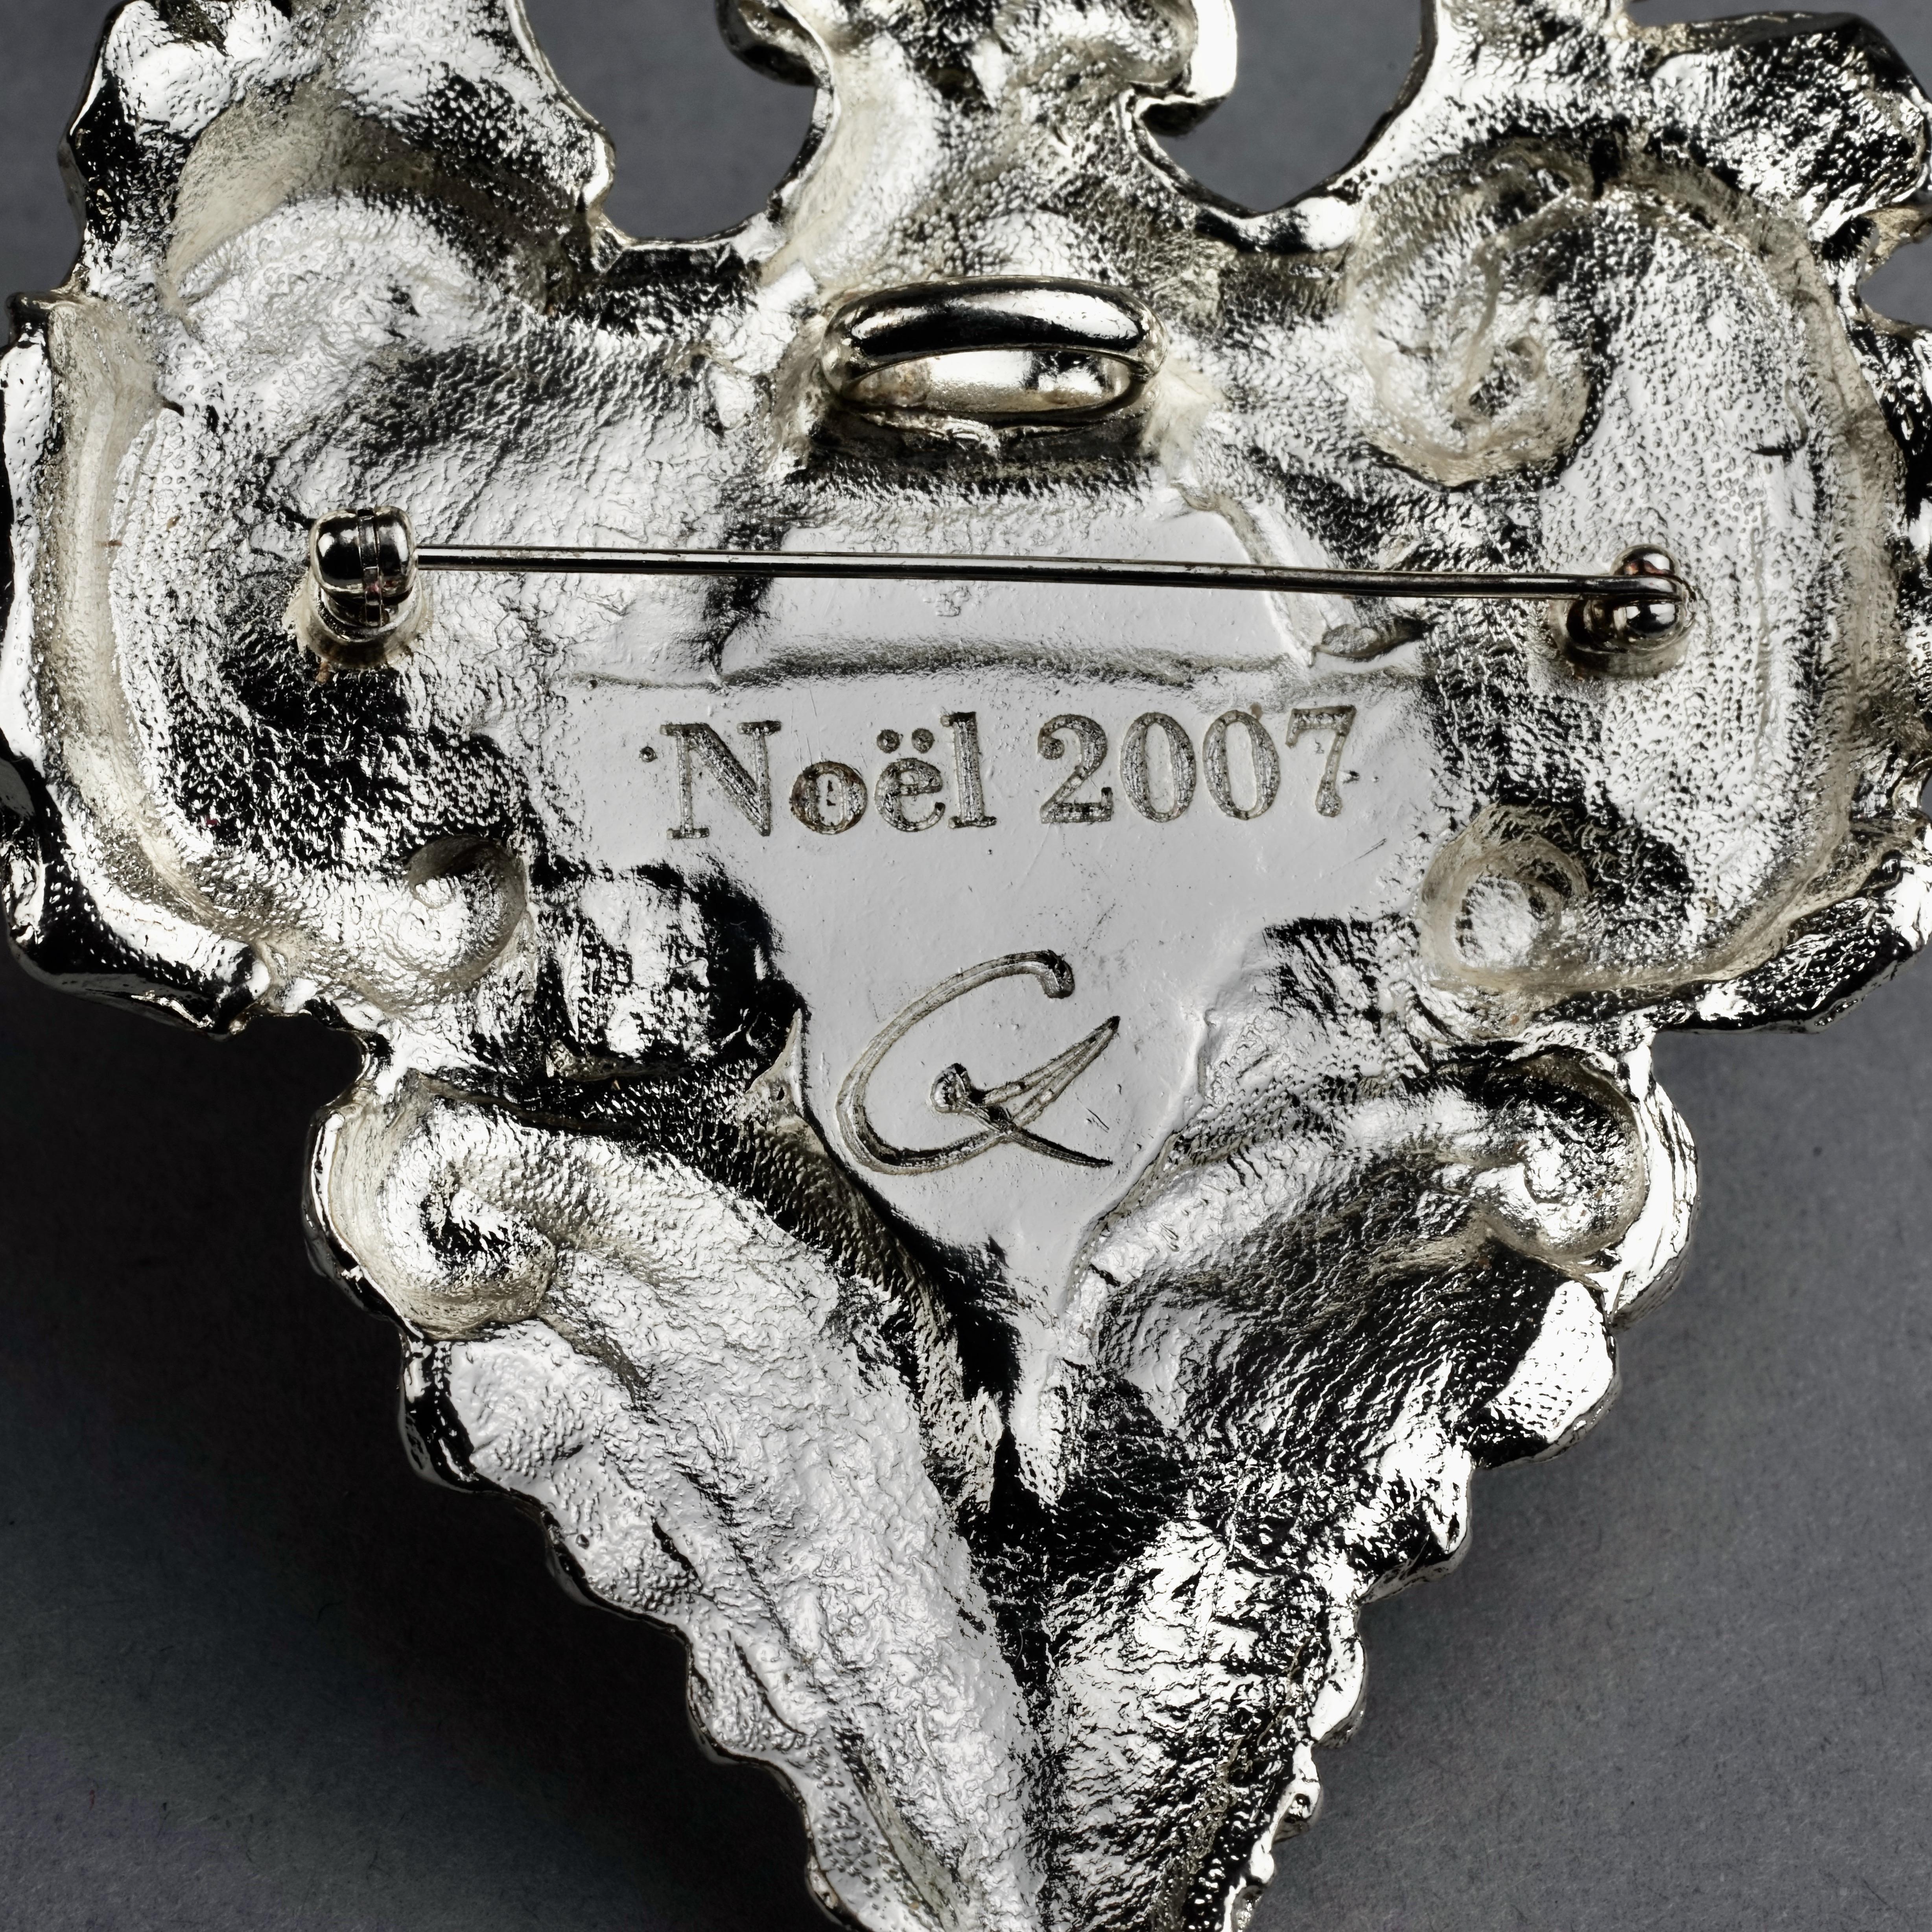 Massive CHRISTIAN LACROIX NOEL 2007 Mirror Heart Limited Edition Pendant Brooch 5